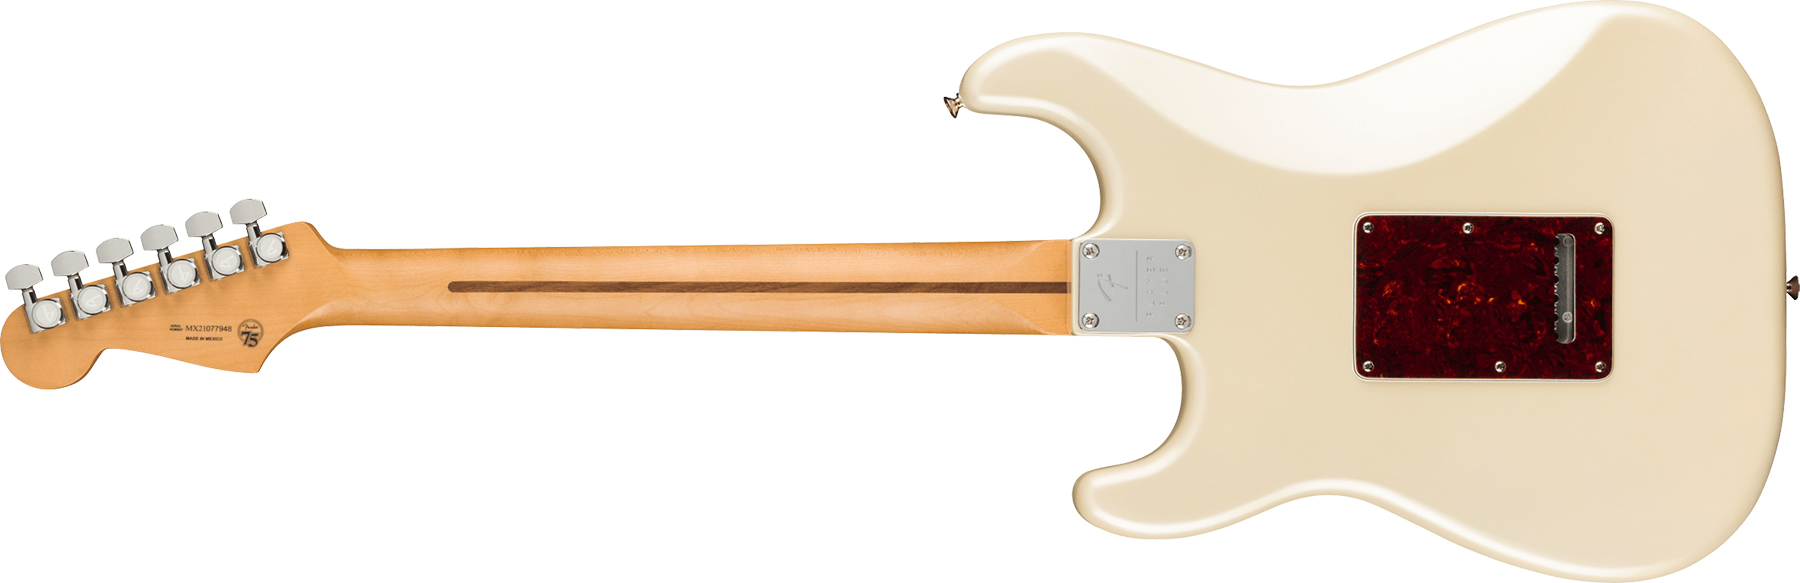 Fender Strat Player Plus Mex 3s Trem Mn - Olympic Pearl - Guitare Électrique Forme Str - Variation 1